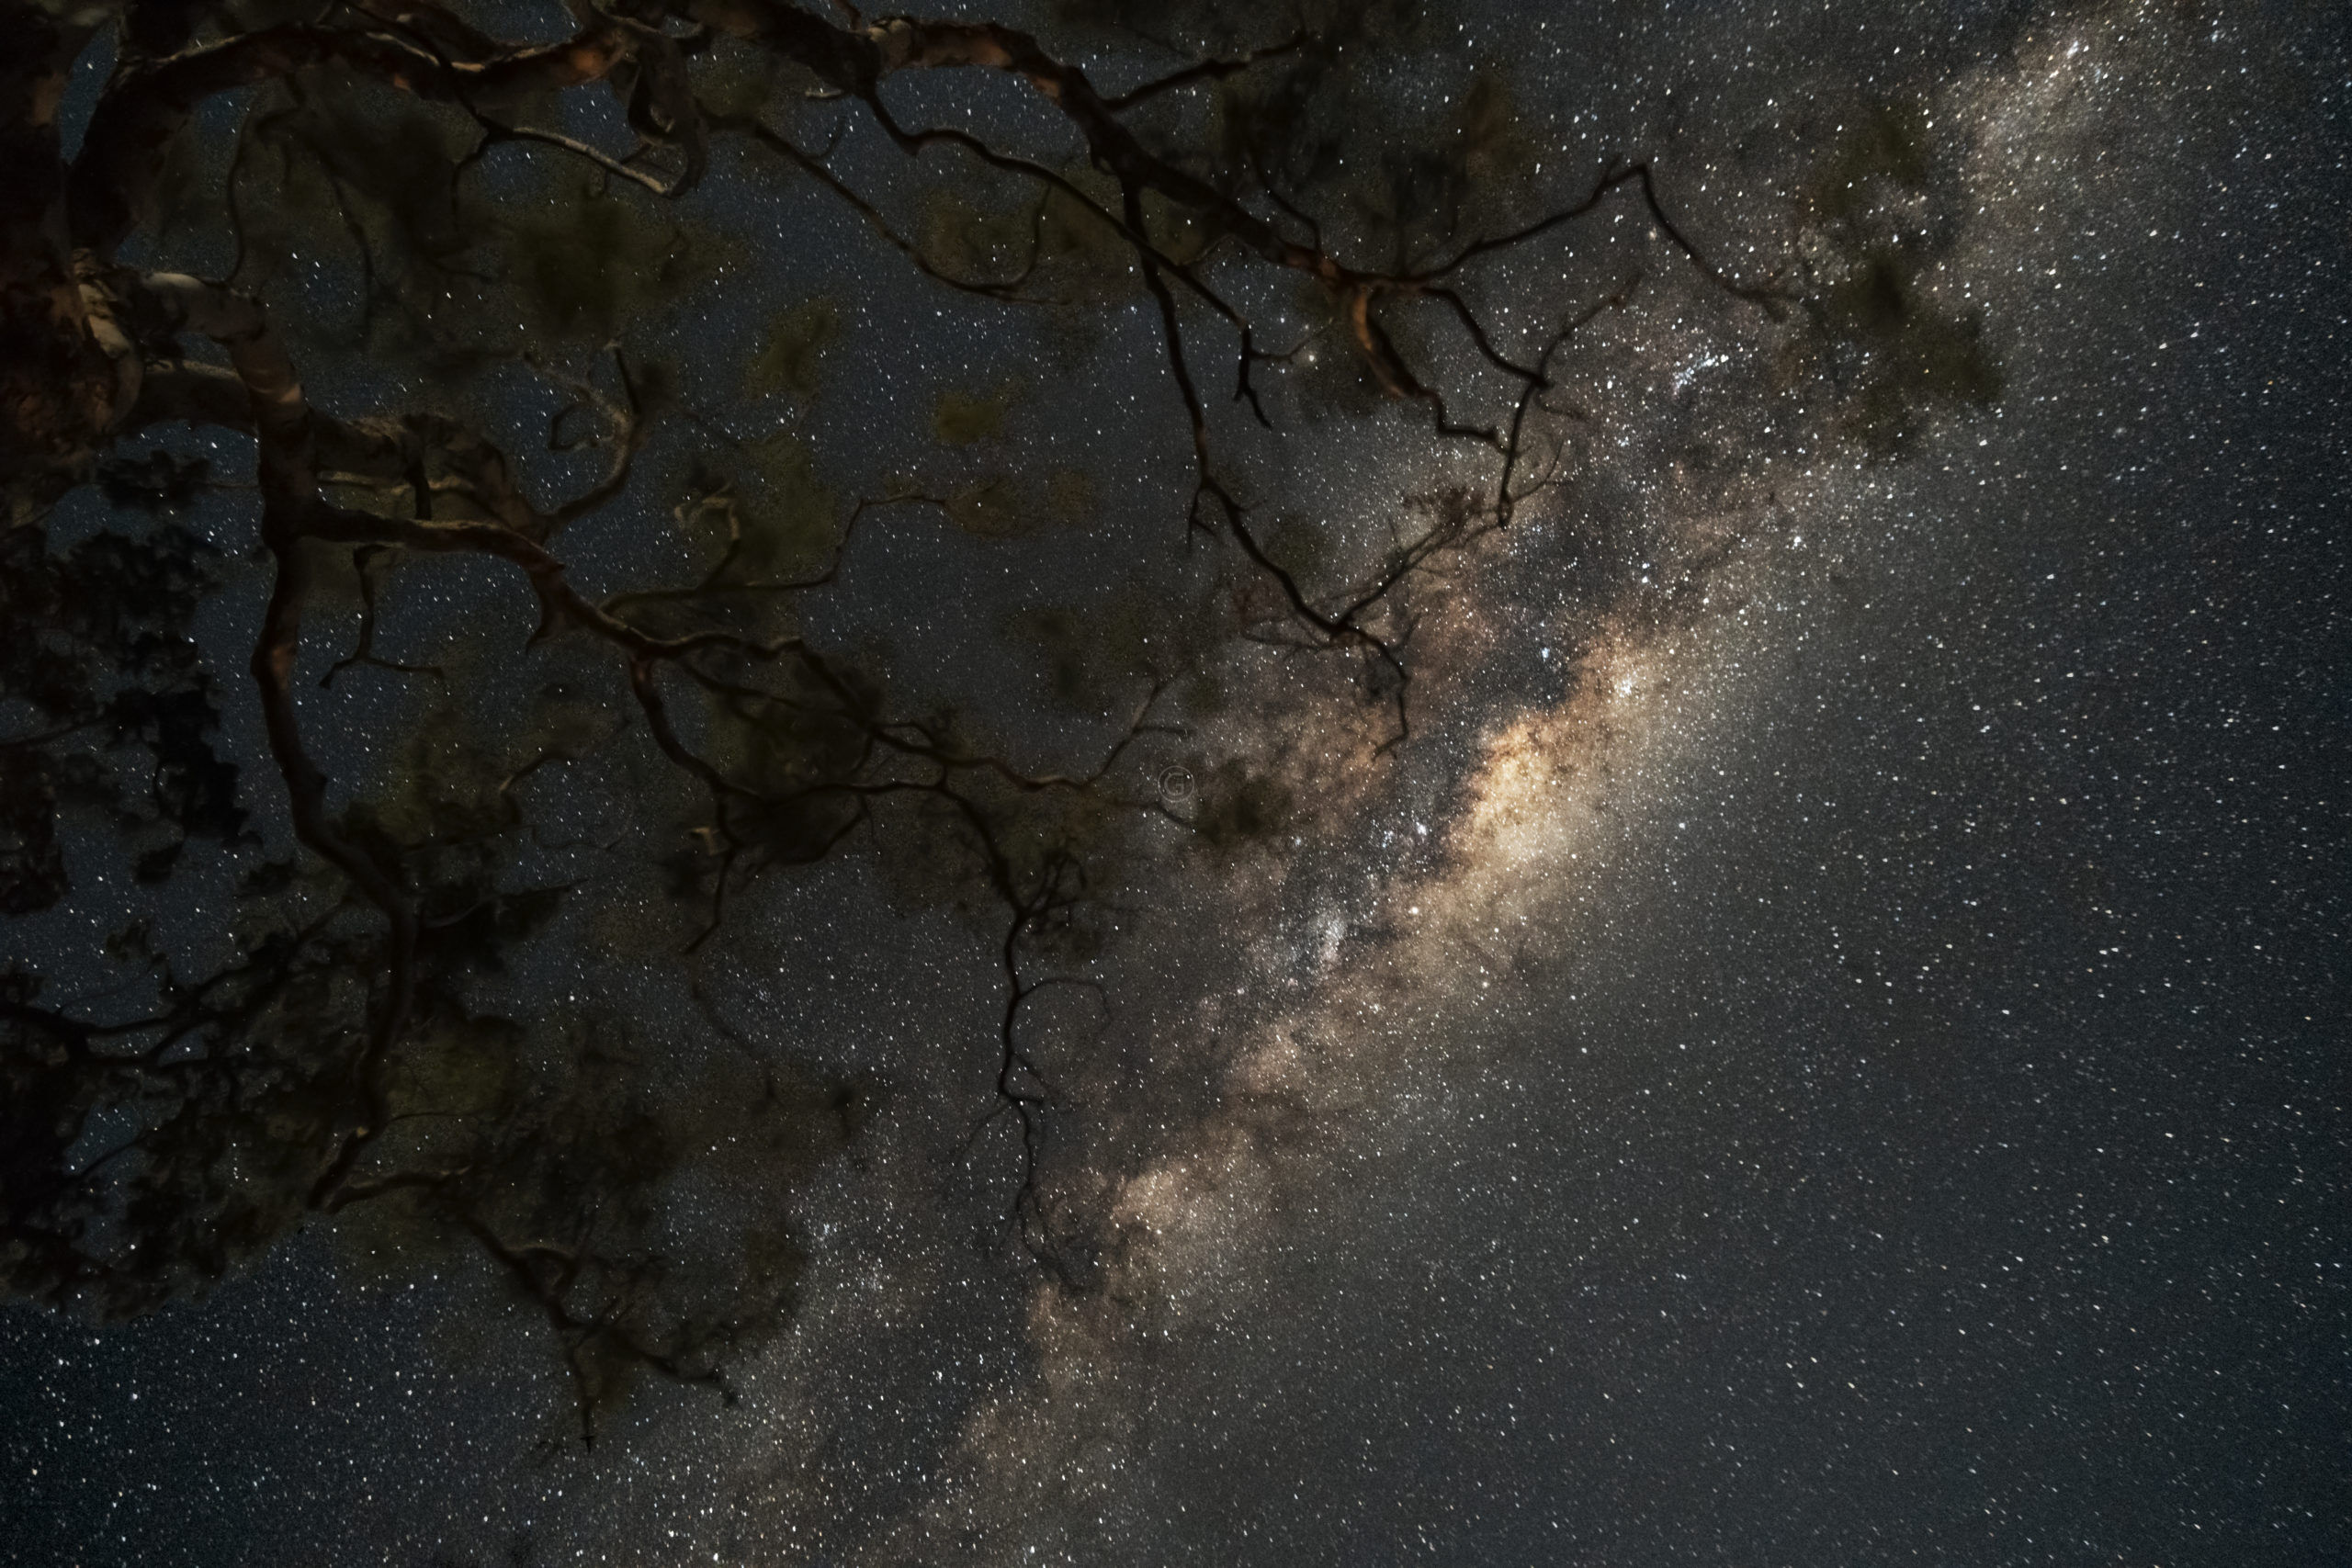 Milky Way through the Gum Trees in Australia